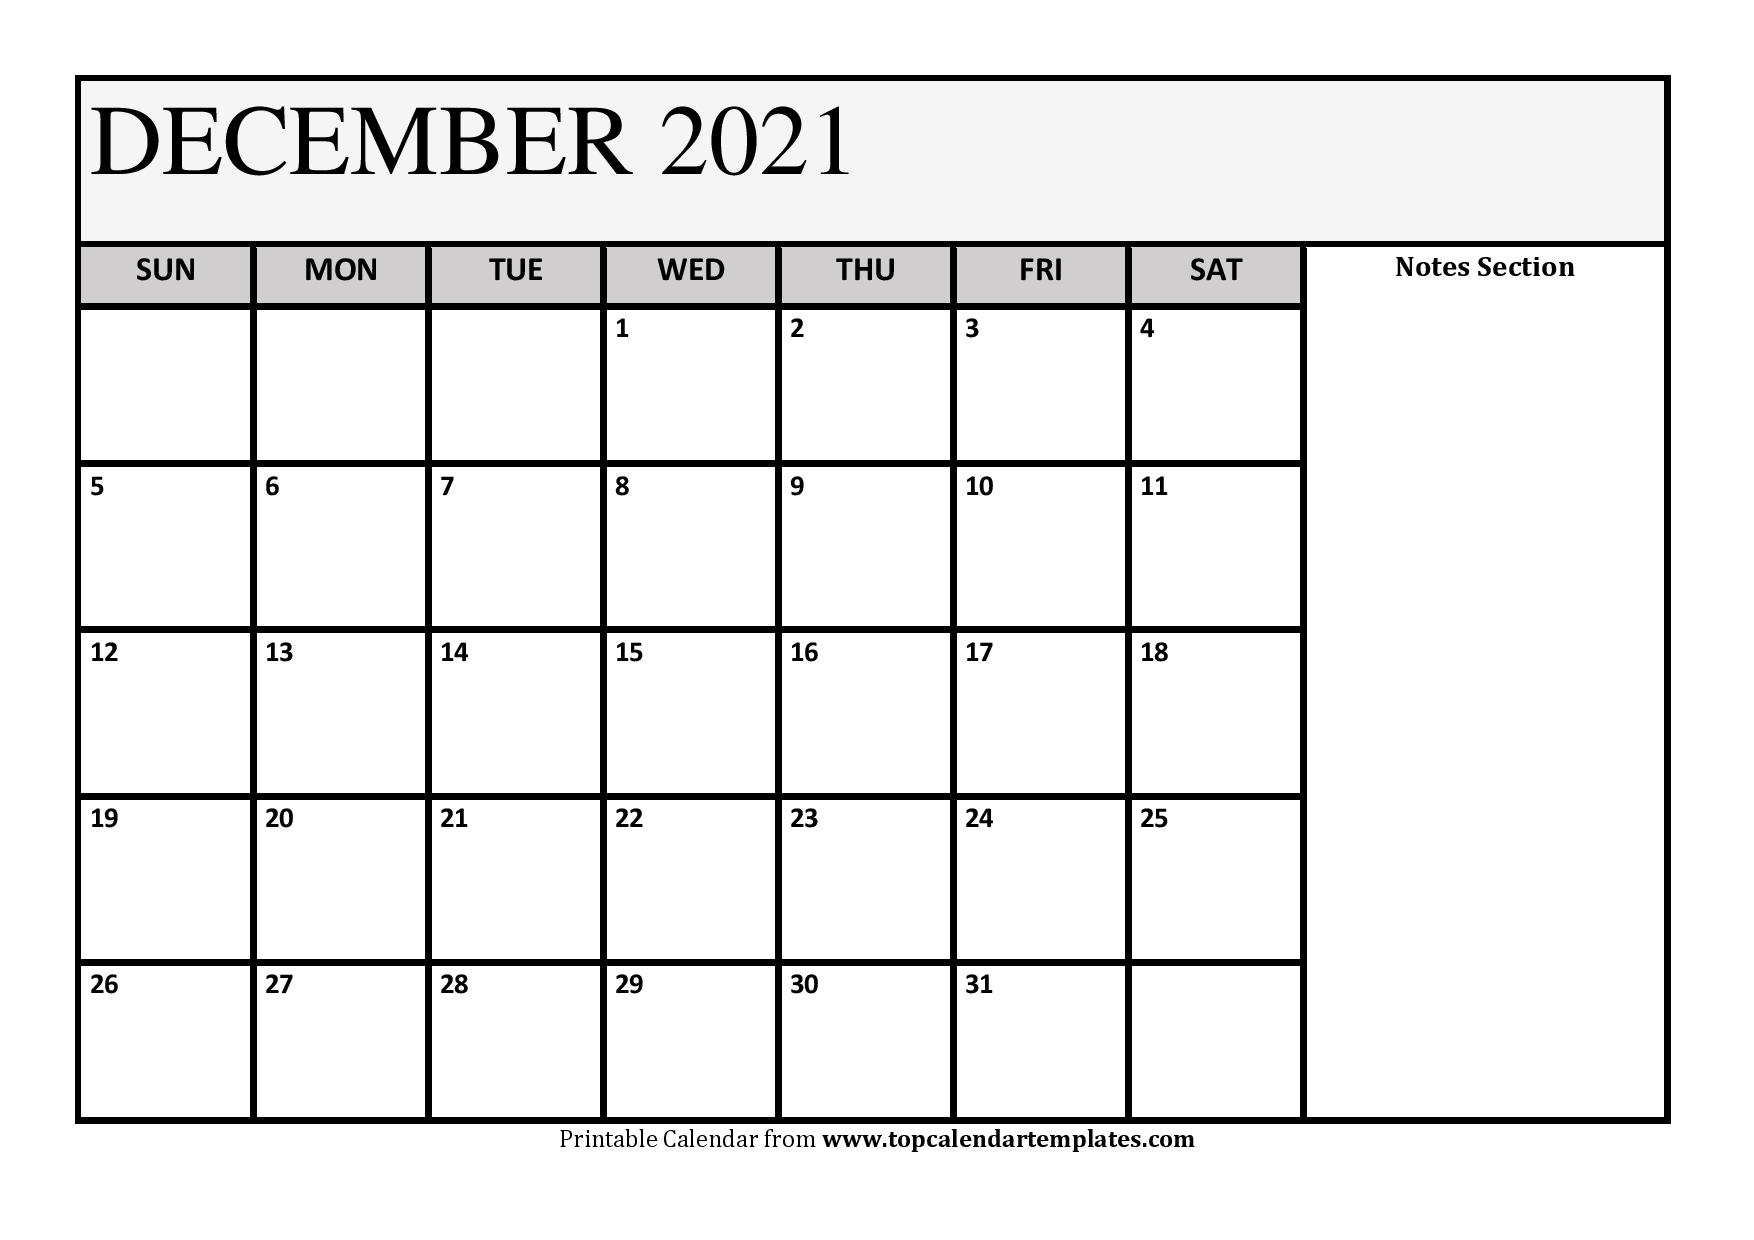 December 2021 Printable Calendar - Monthly Templates